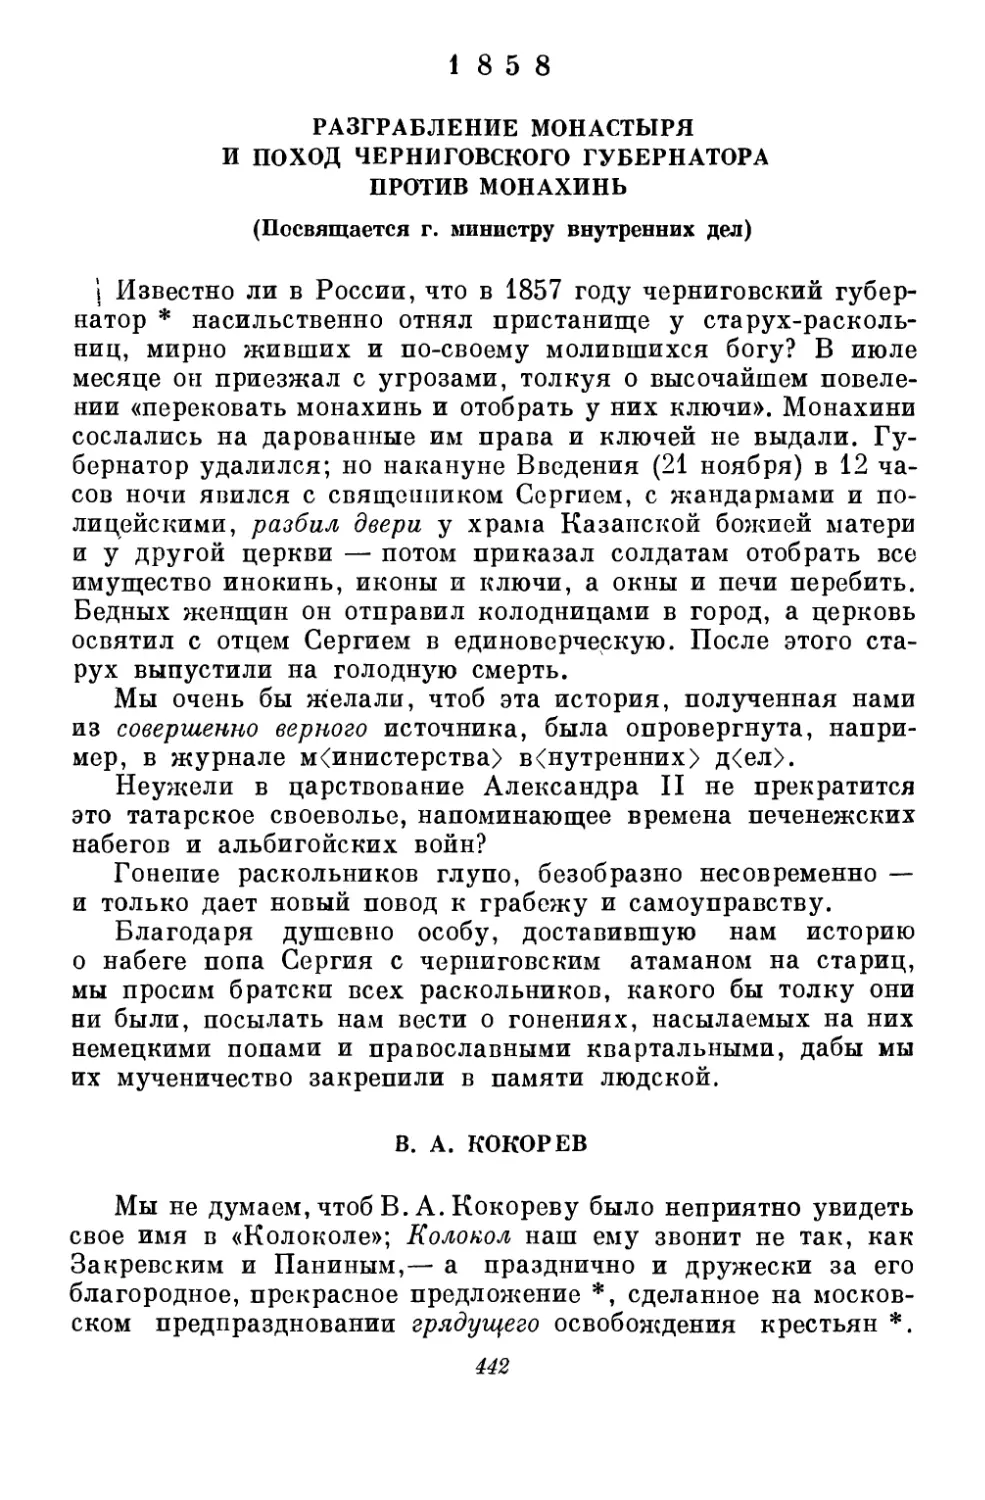 1858
В.А. Кокорев